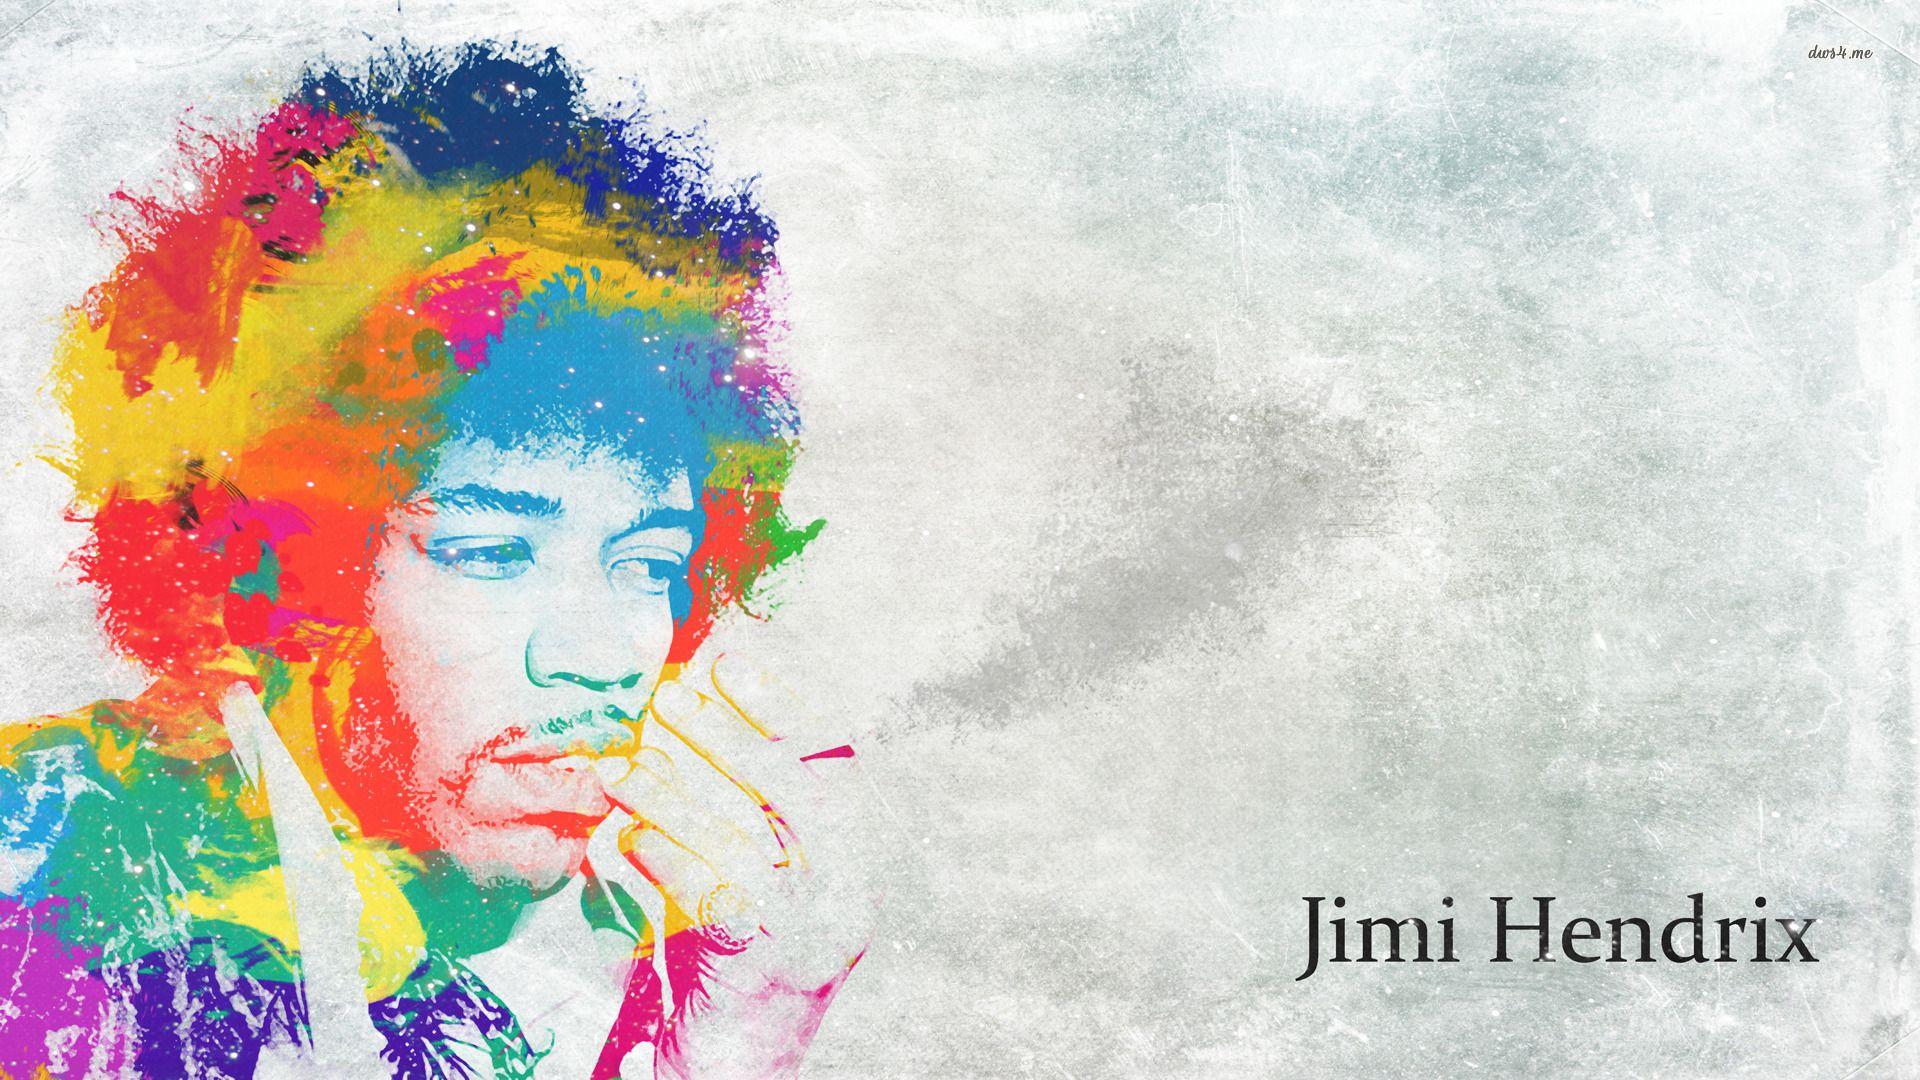 Jimi Hendrix Wallpaper Image Photo Picture Background 1920